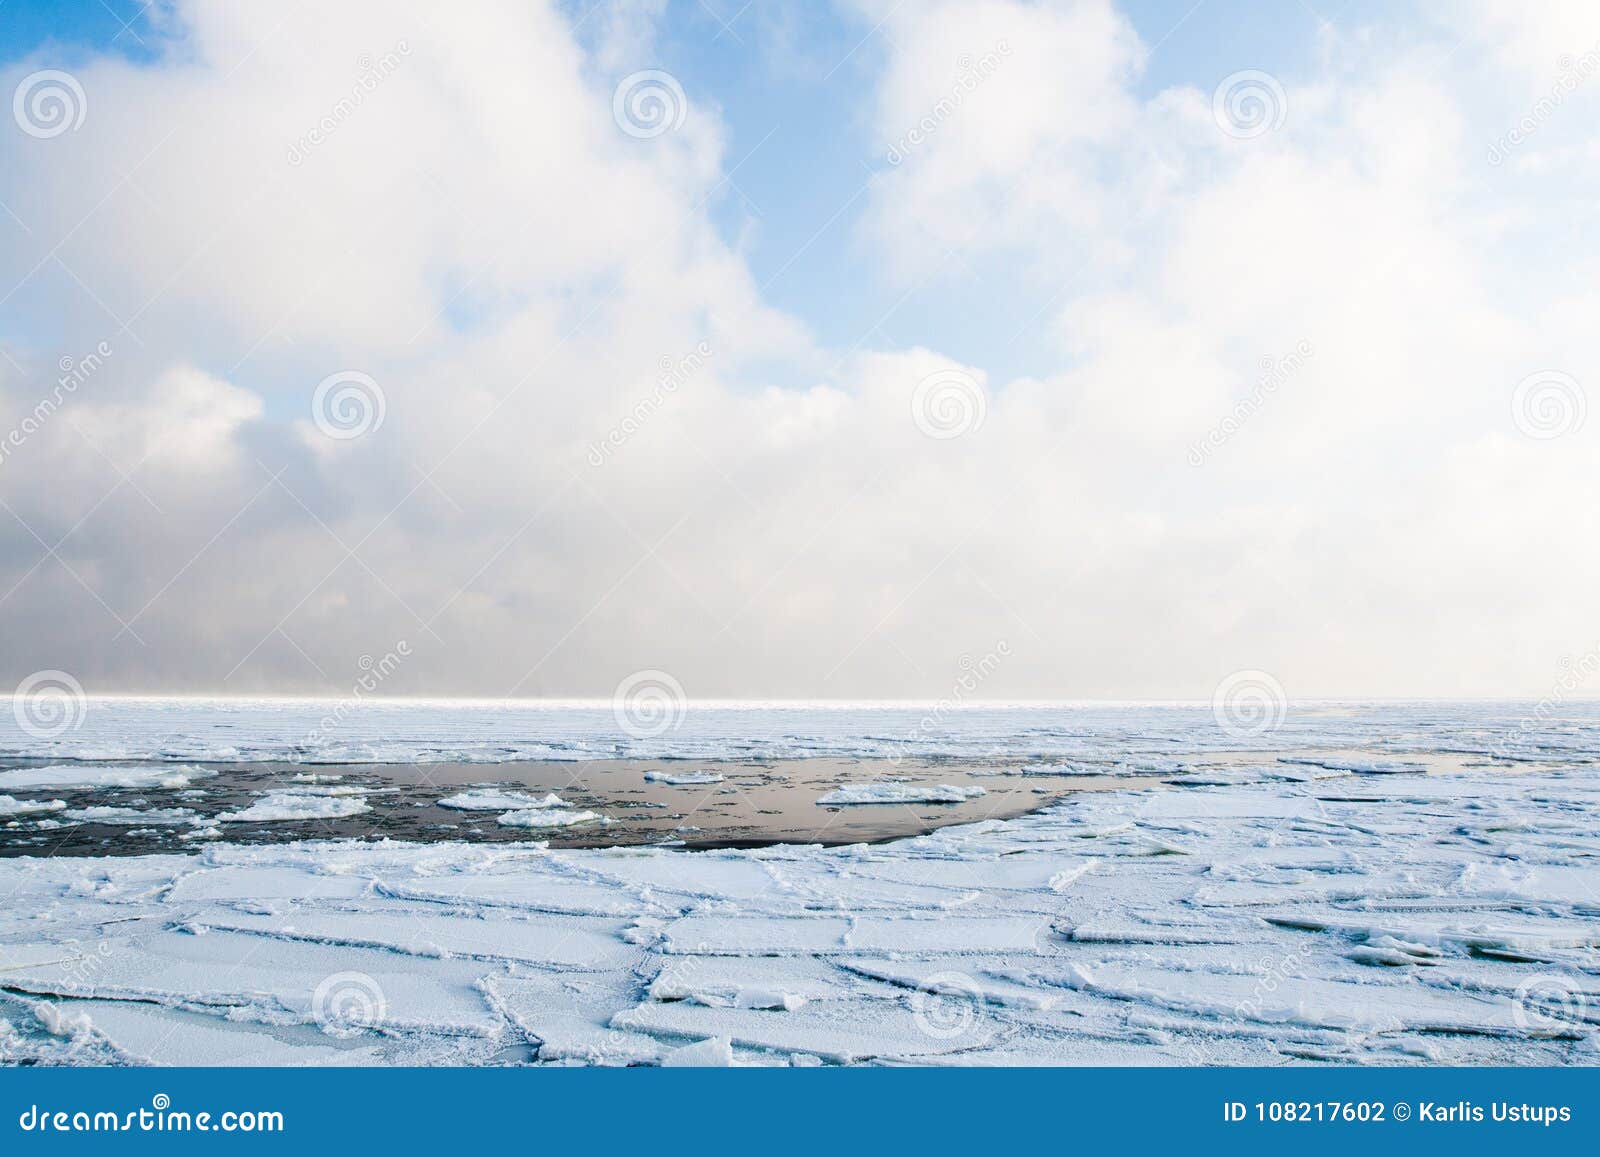 Engure, Латвия Лед смещения плавая на море в зиму Облачное небо, туман, лед и вода